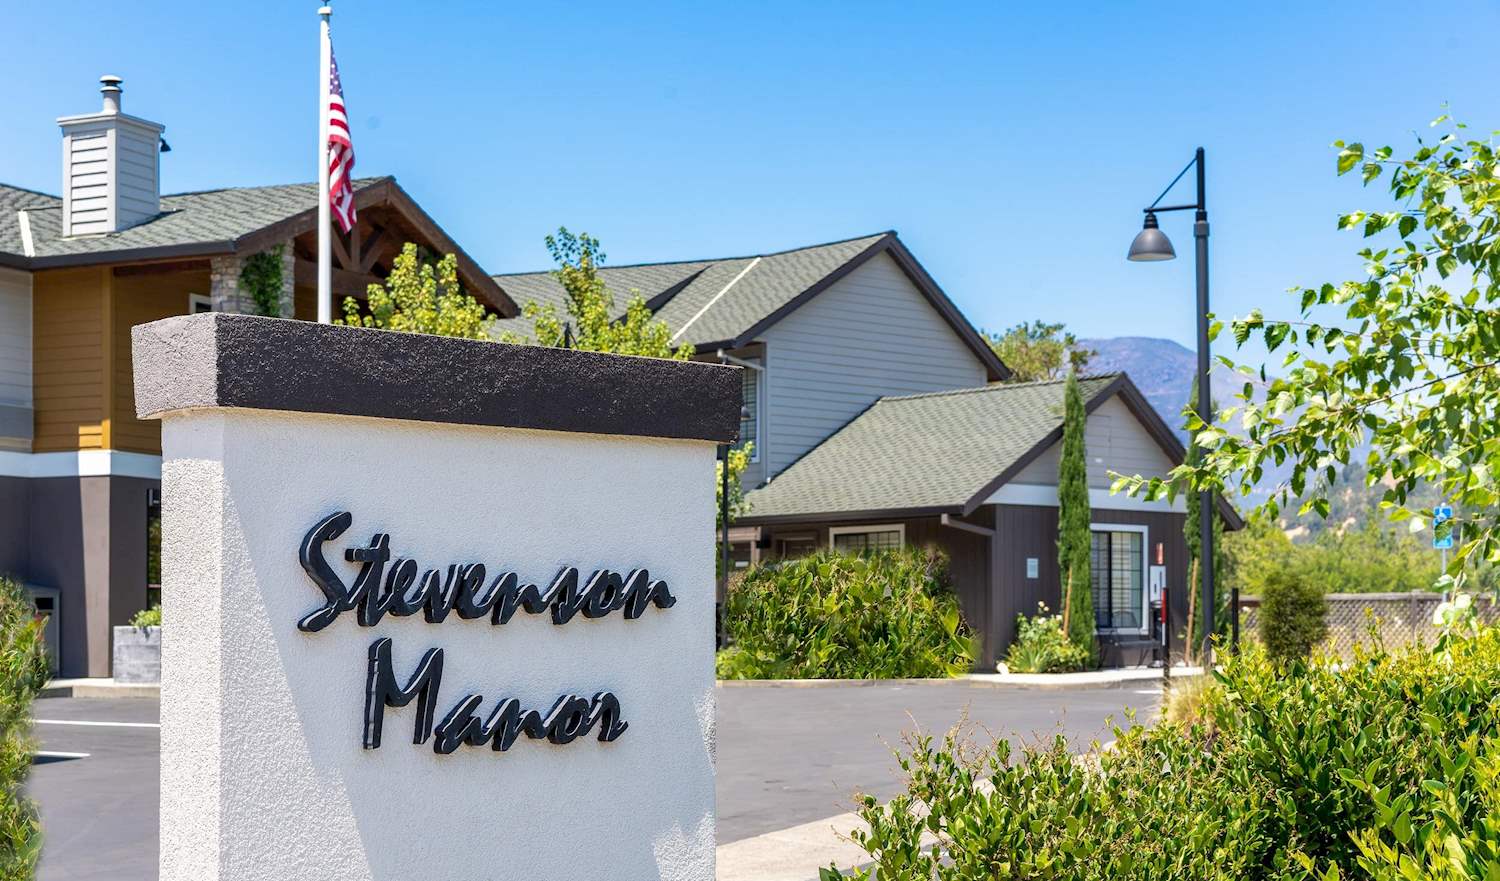 Calistoga Ca Hotel Best Western Plus Stevenson Manor - 